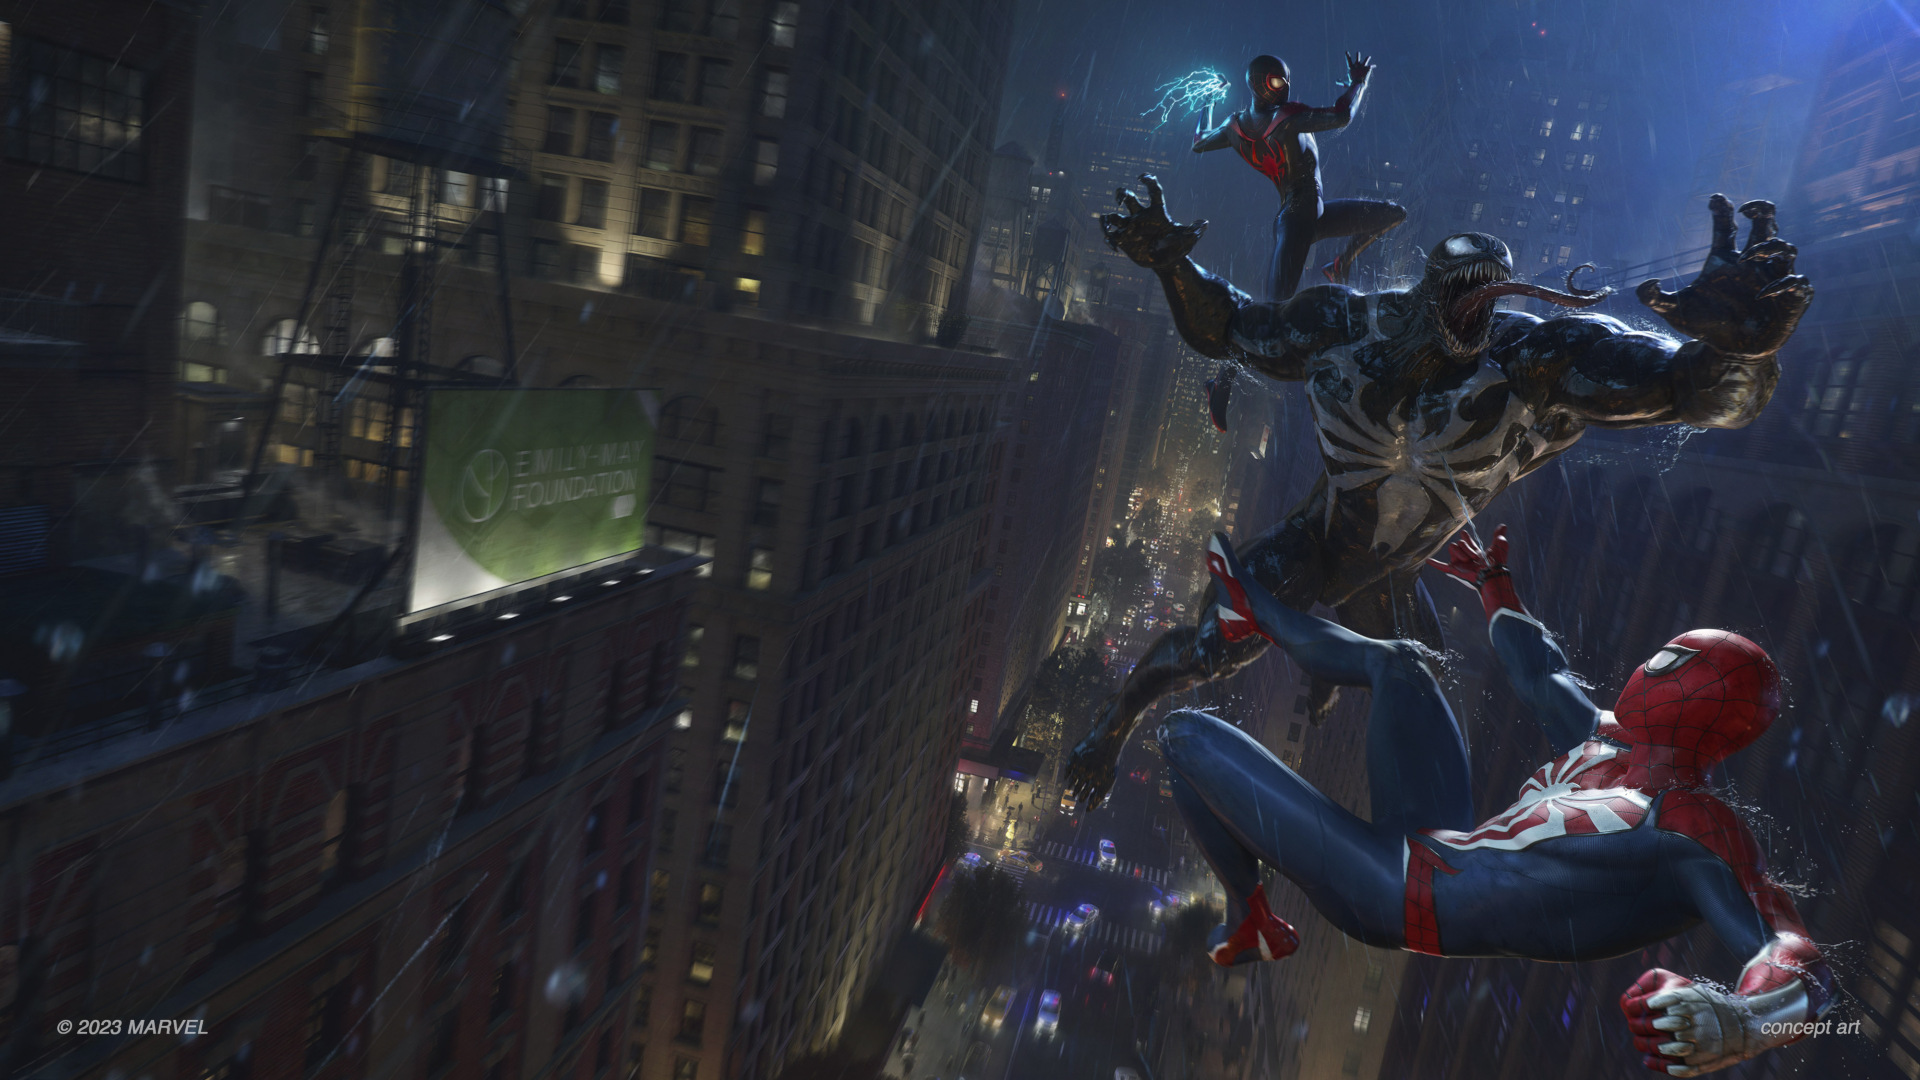 Marvel's Spider-Man 2 chega exclusivamente ao PS5 dia 20 de